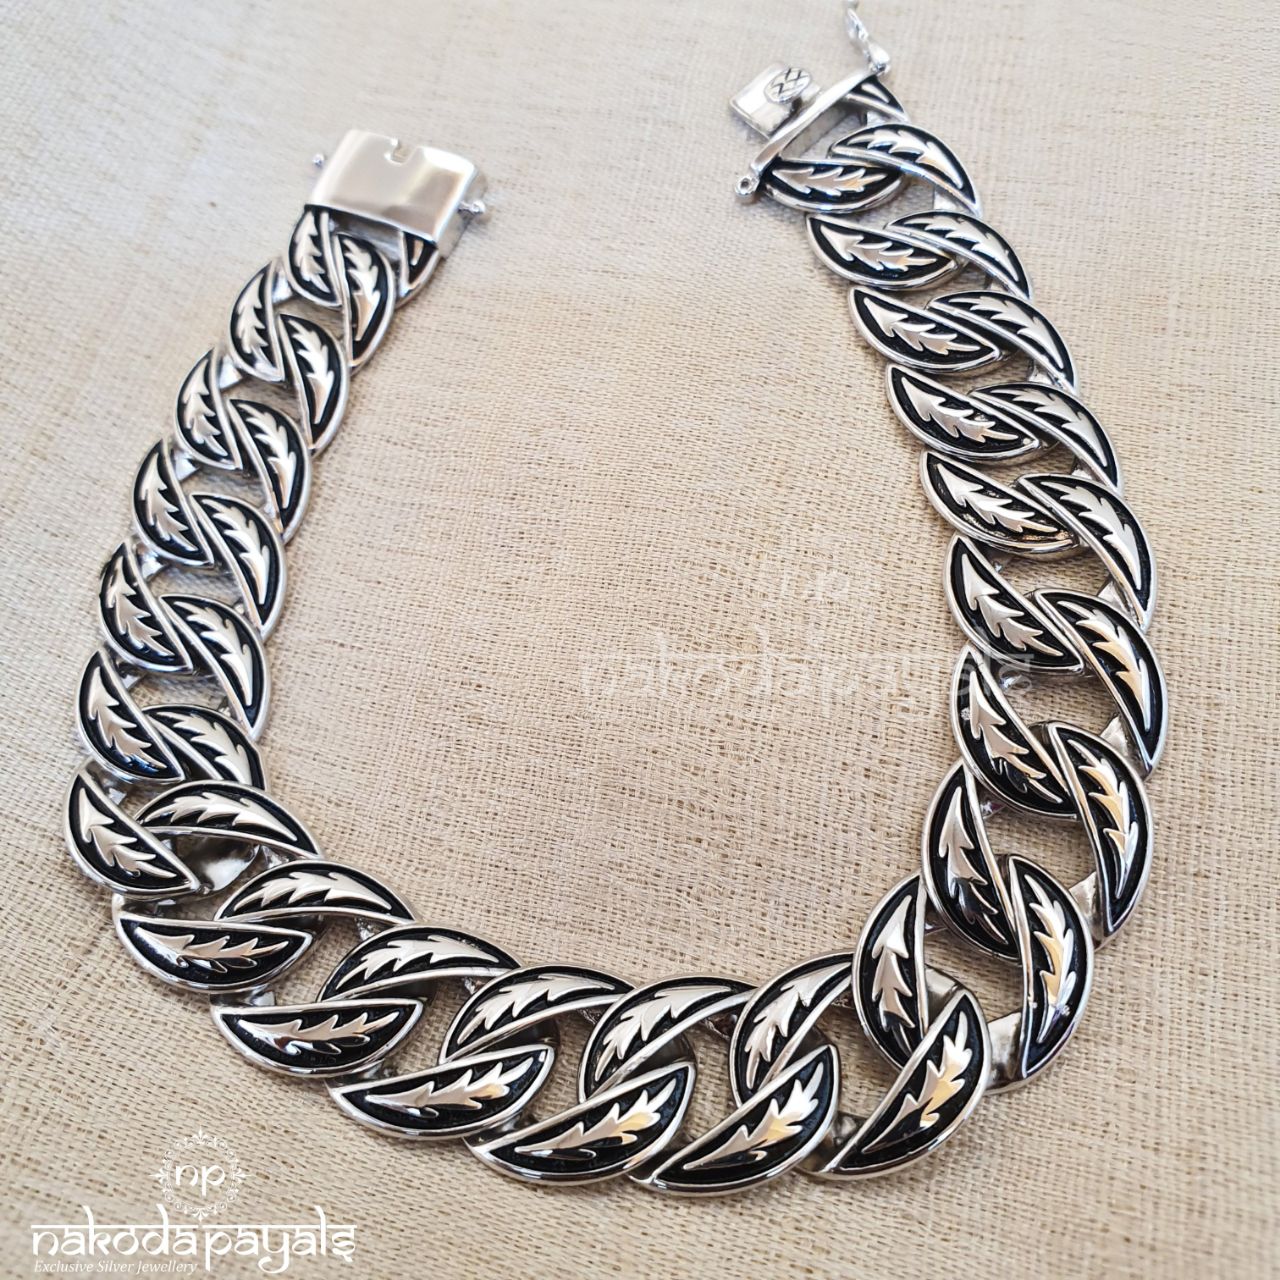 Mannish Men's Bracelet